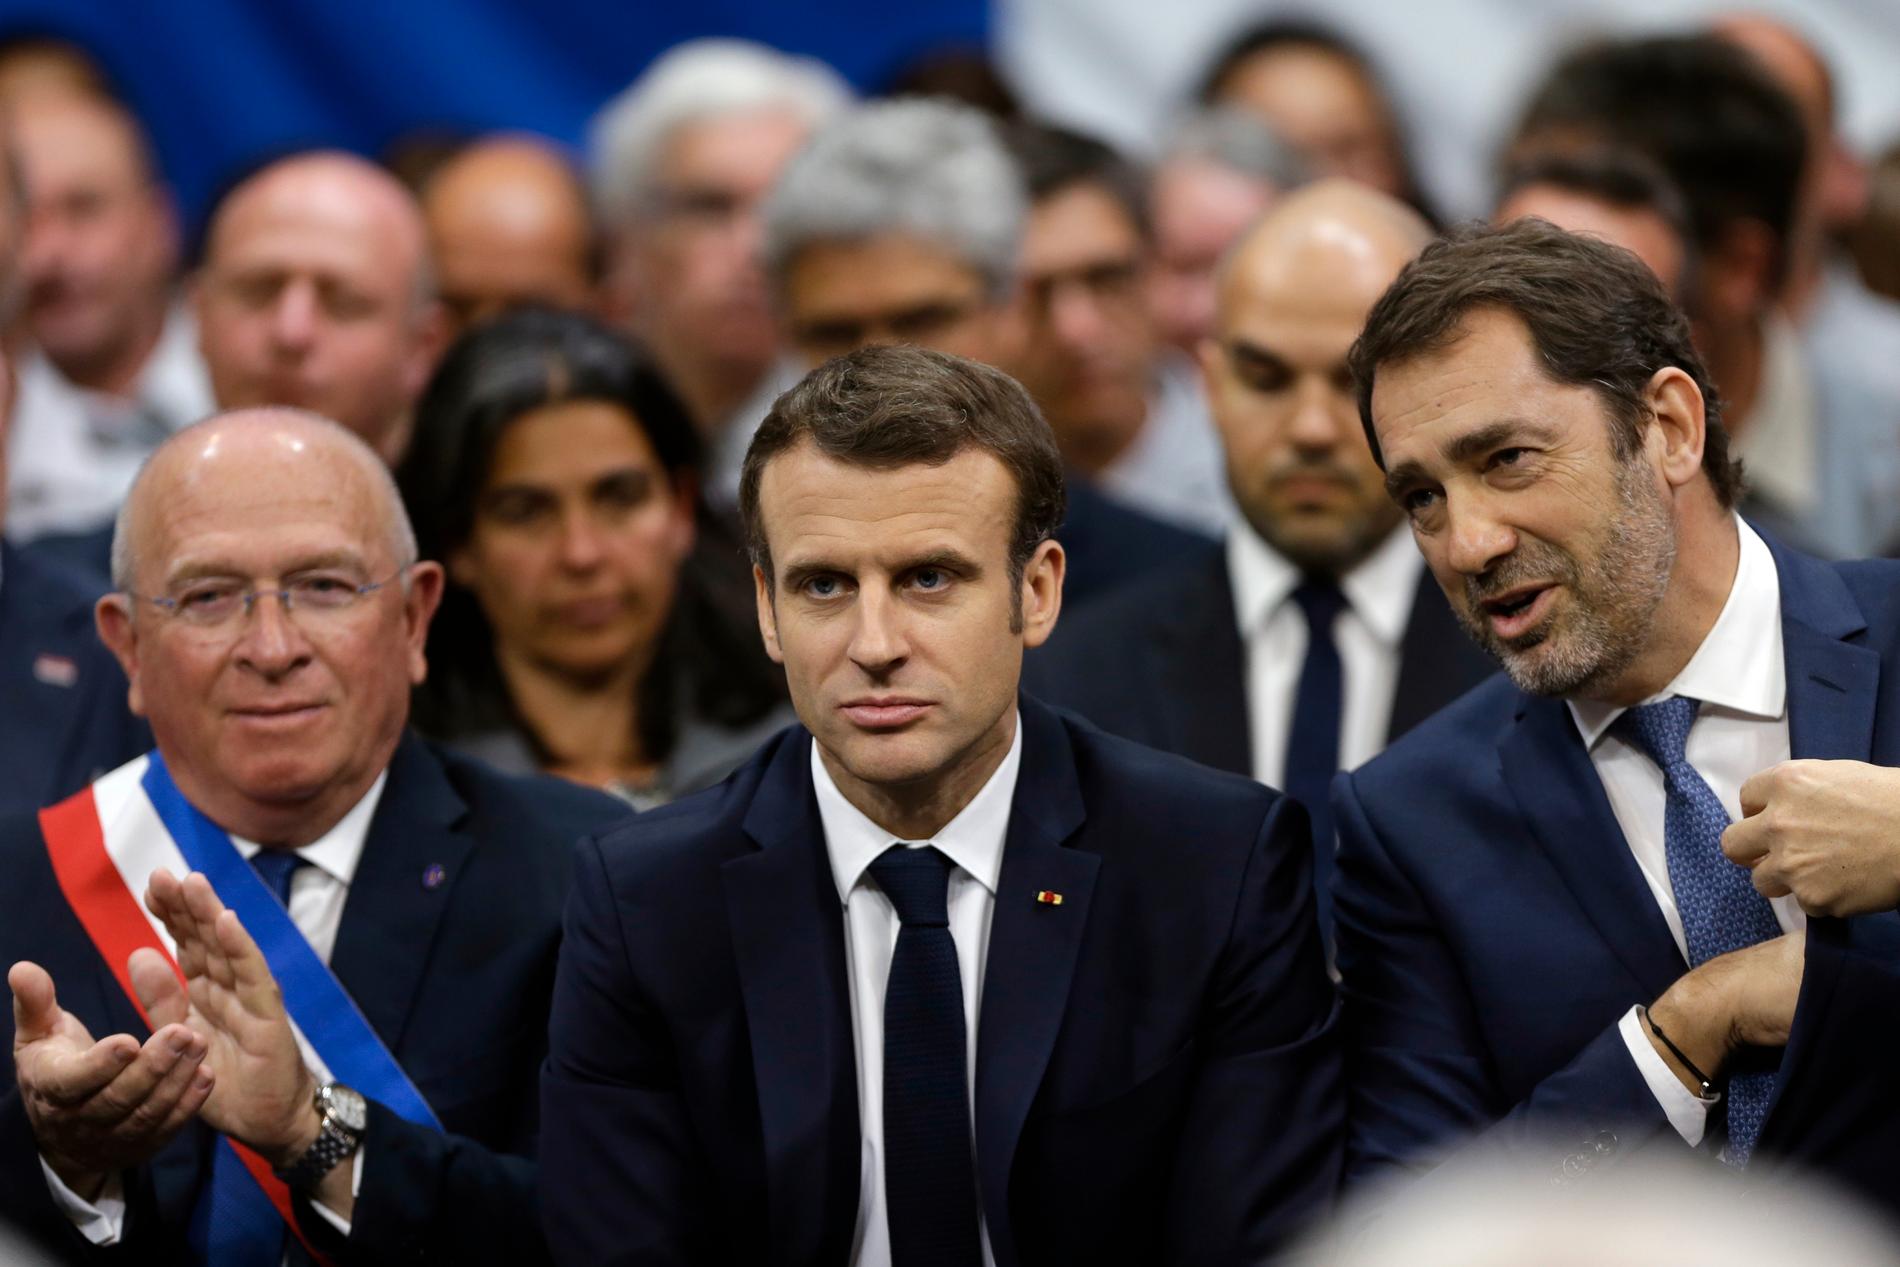 Frankrikes president Emmanuel Macrons parti La république en marche kommer att bli en maktfaktor i EU-parlamentet, tror statsvetaren Sofie Blombäck. Arkivbild.